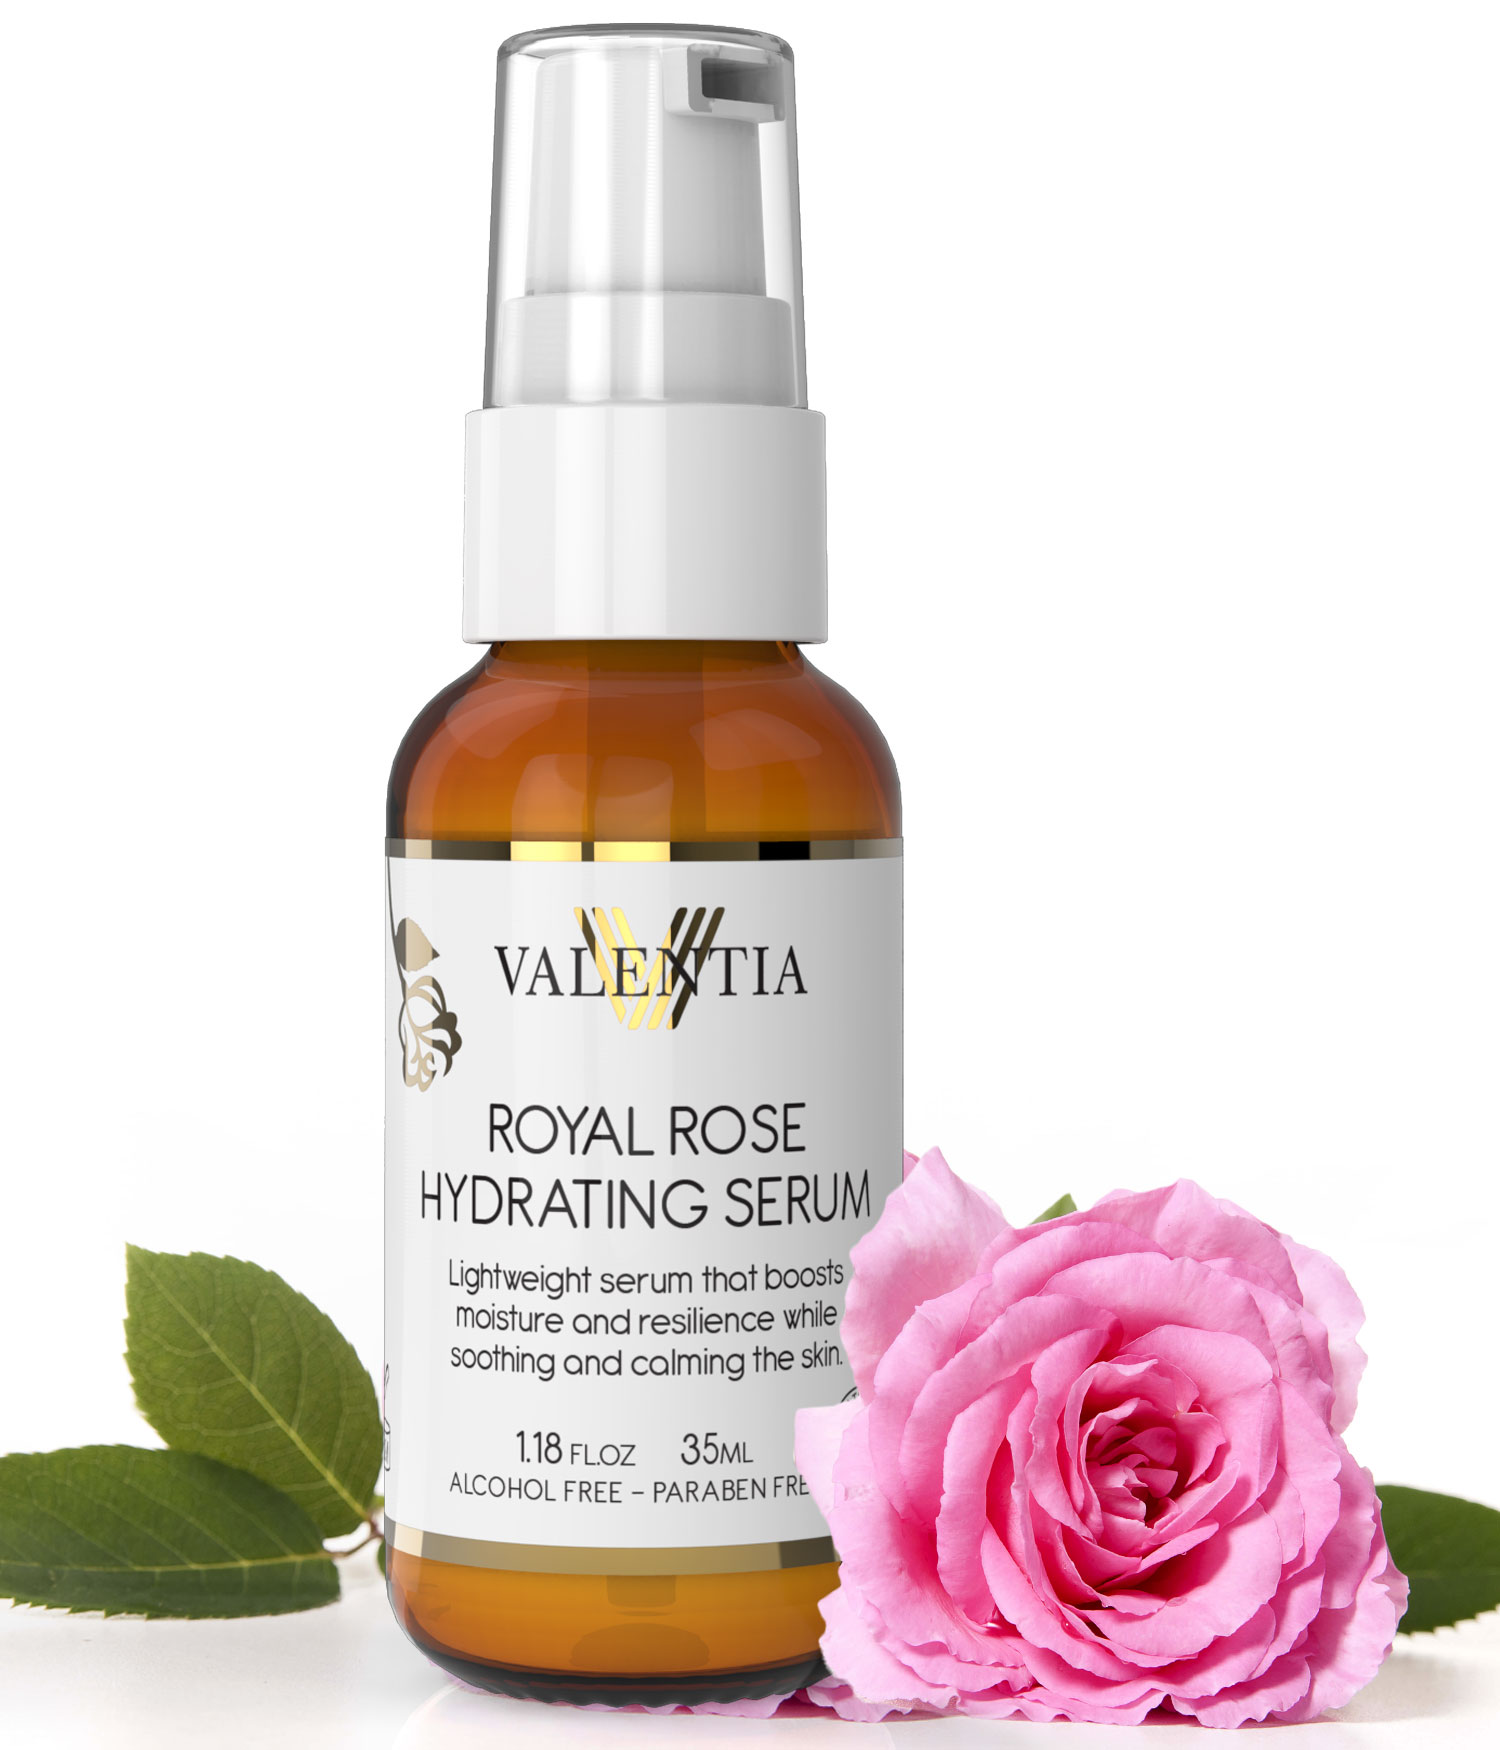 Valentia Royal Rose Hydrating Serum